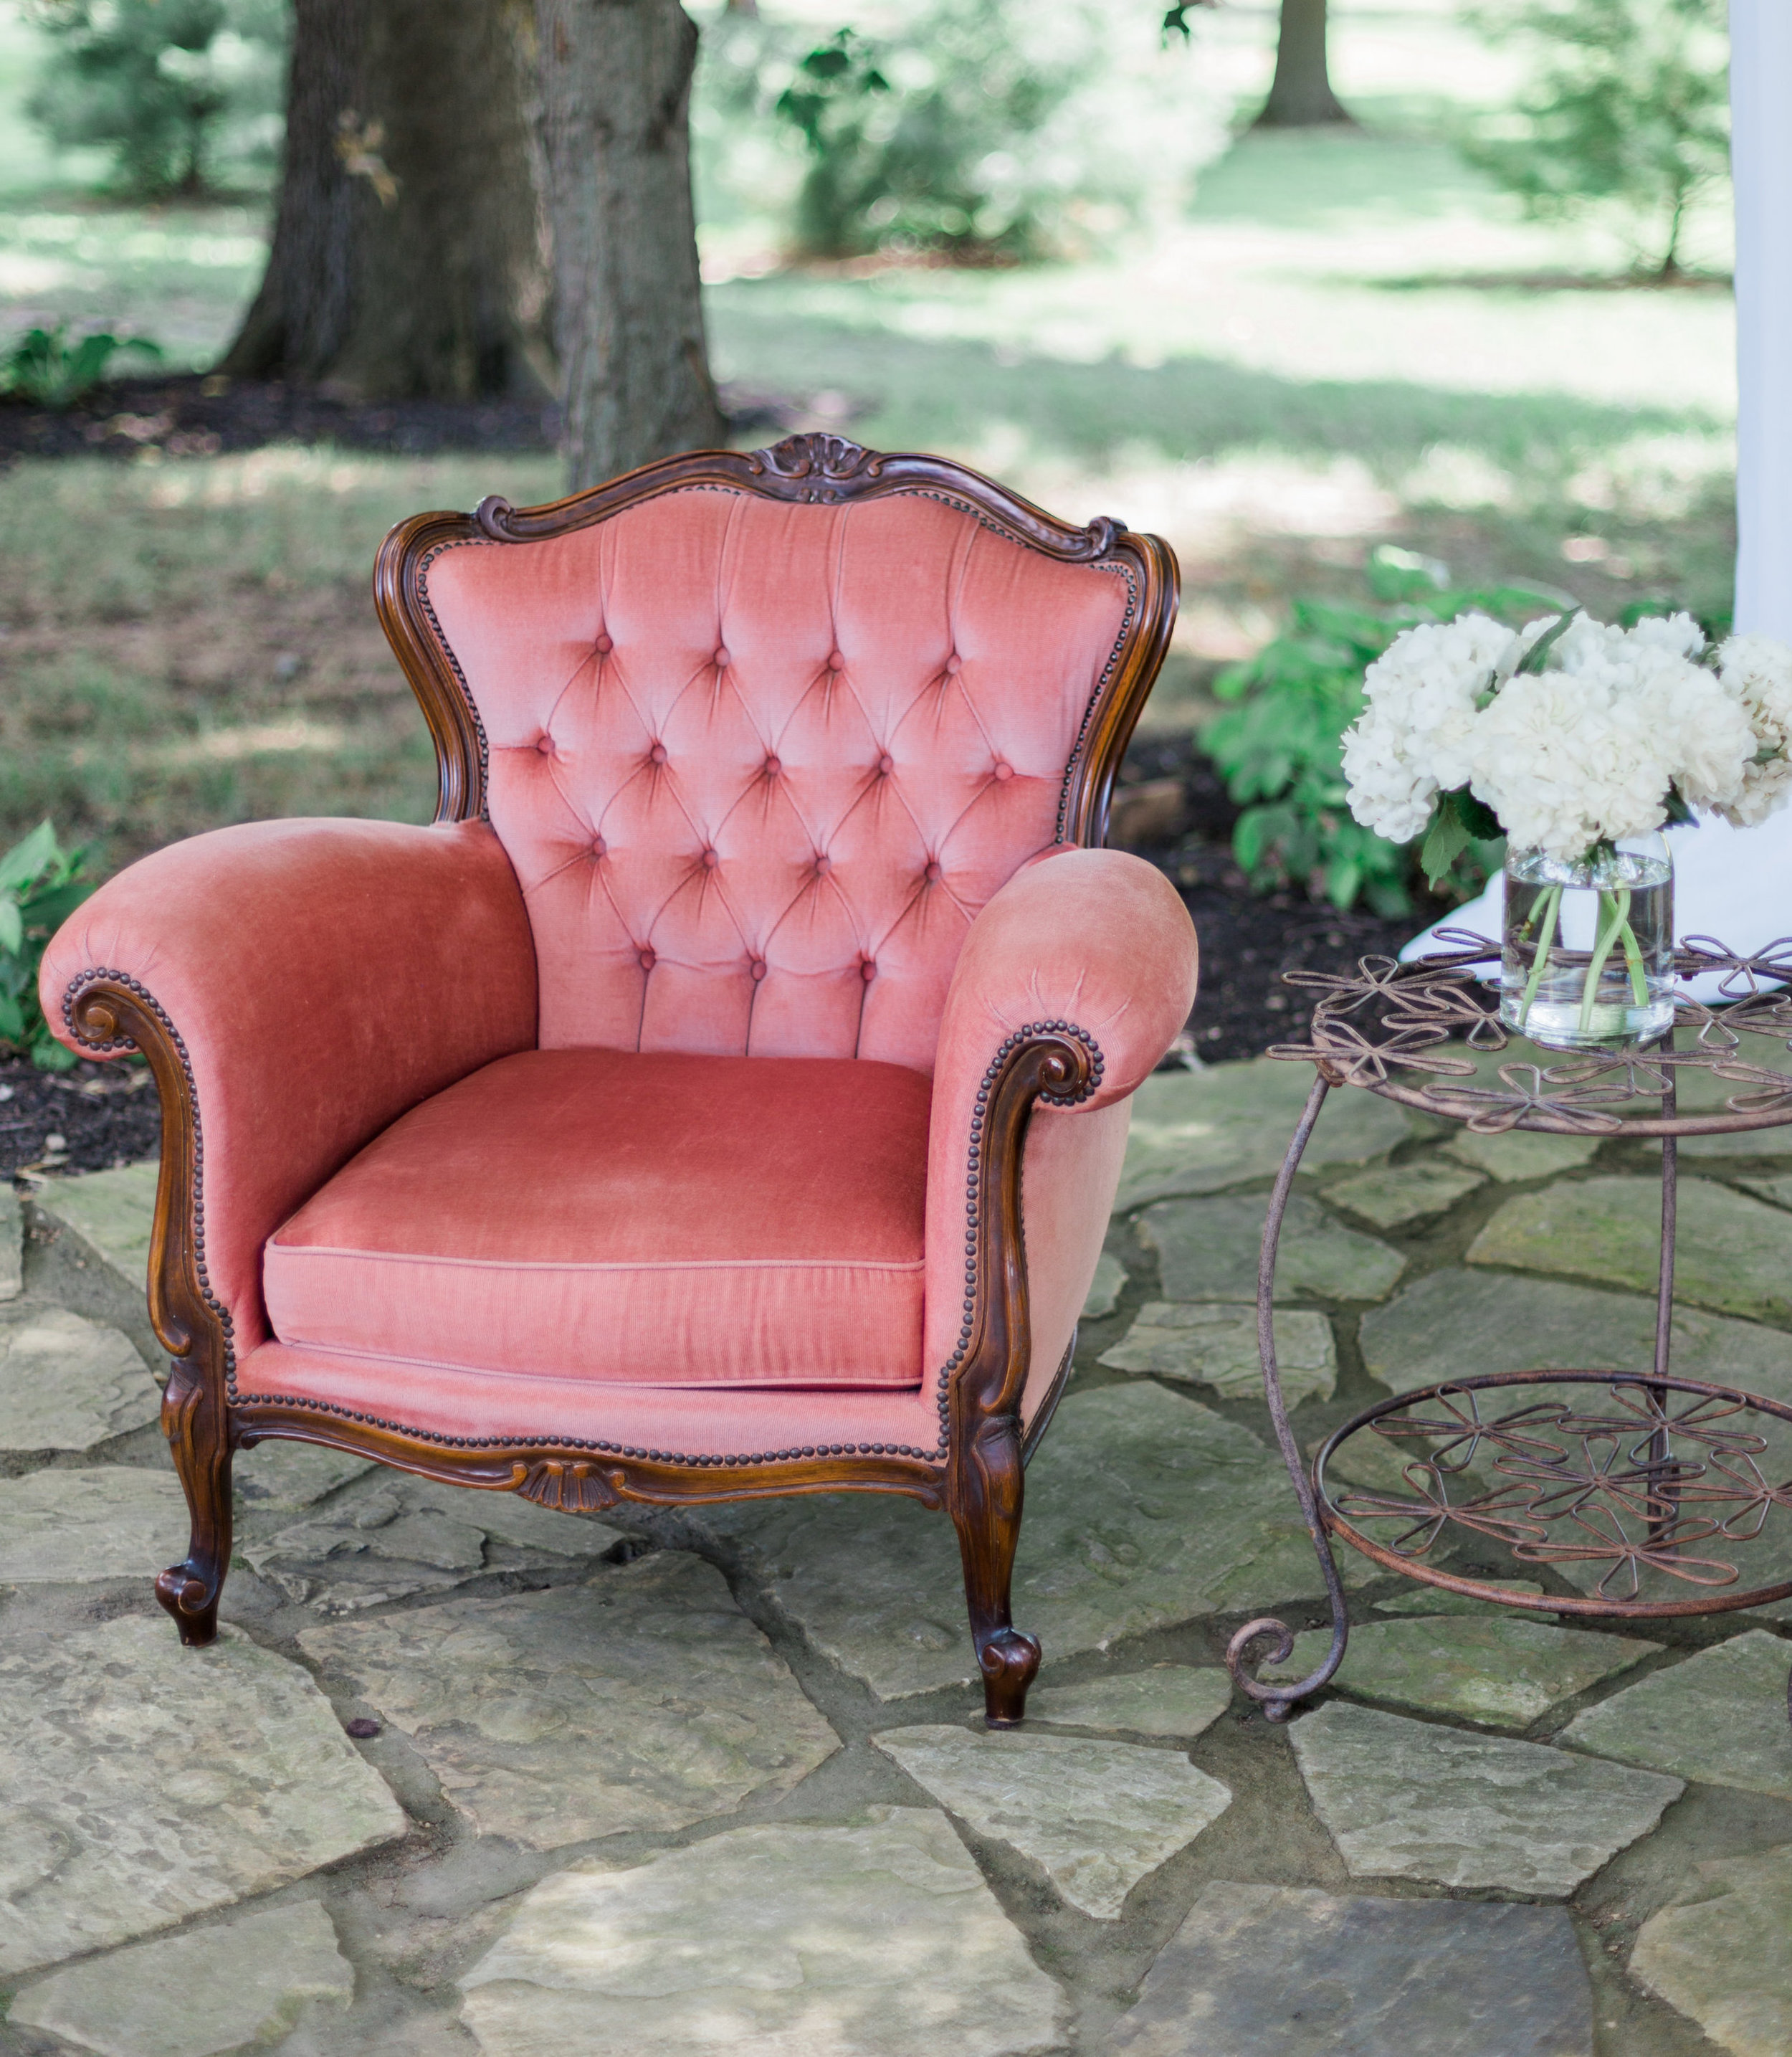 pink chair — mustard seed gardens